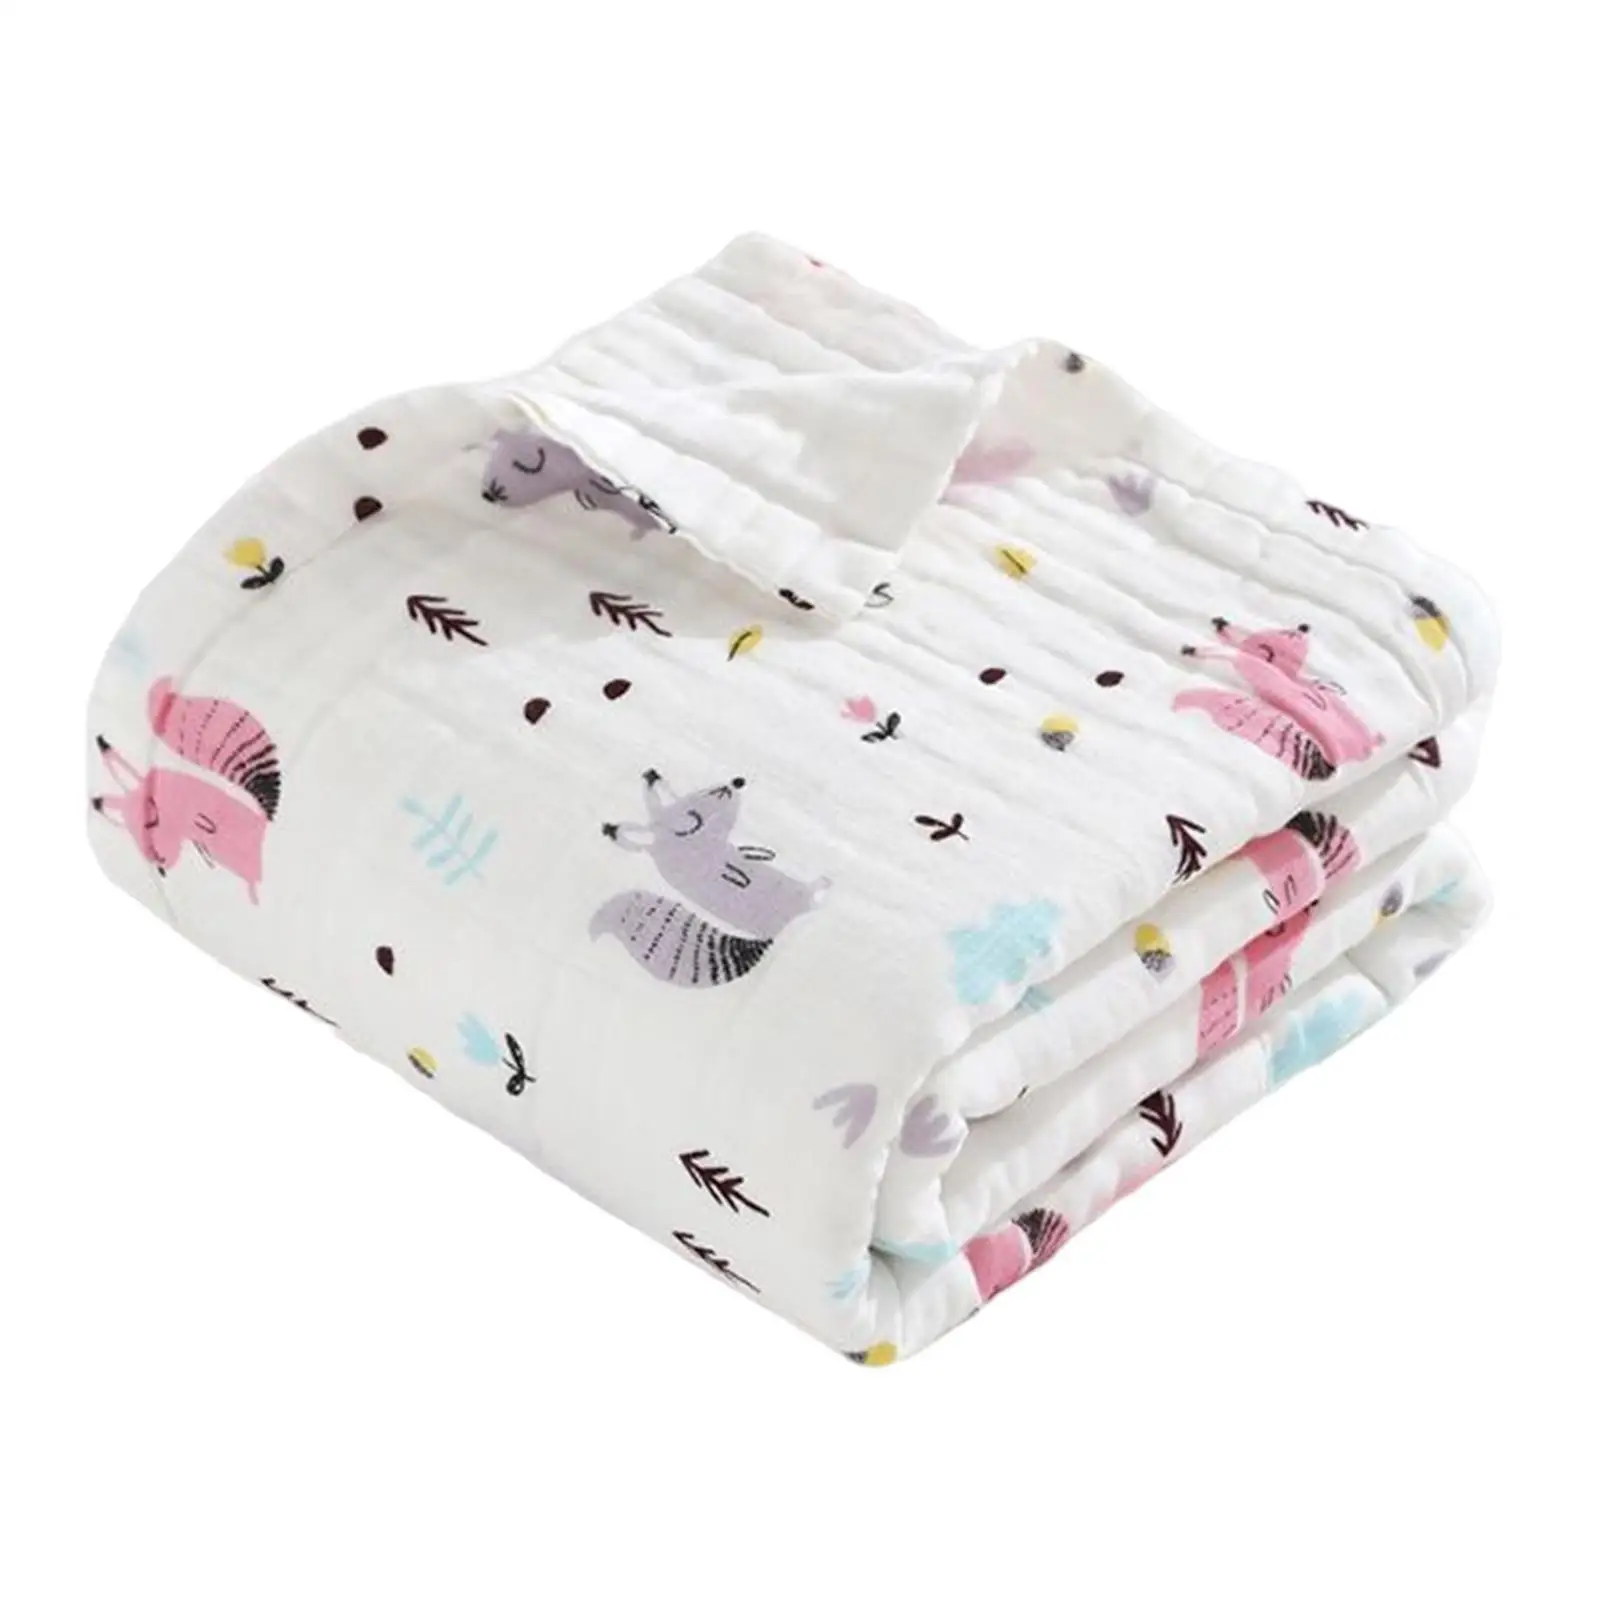 110x110cm bath Towel Thick Cotton Comfortable Breathable Square Boys Girls Washcloths Wash Cloth Child Body Wrap Blanket